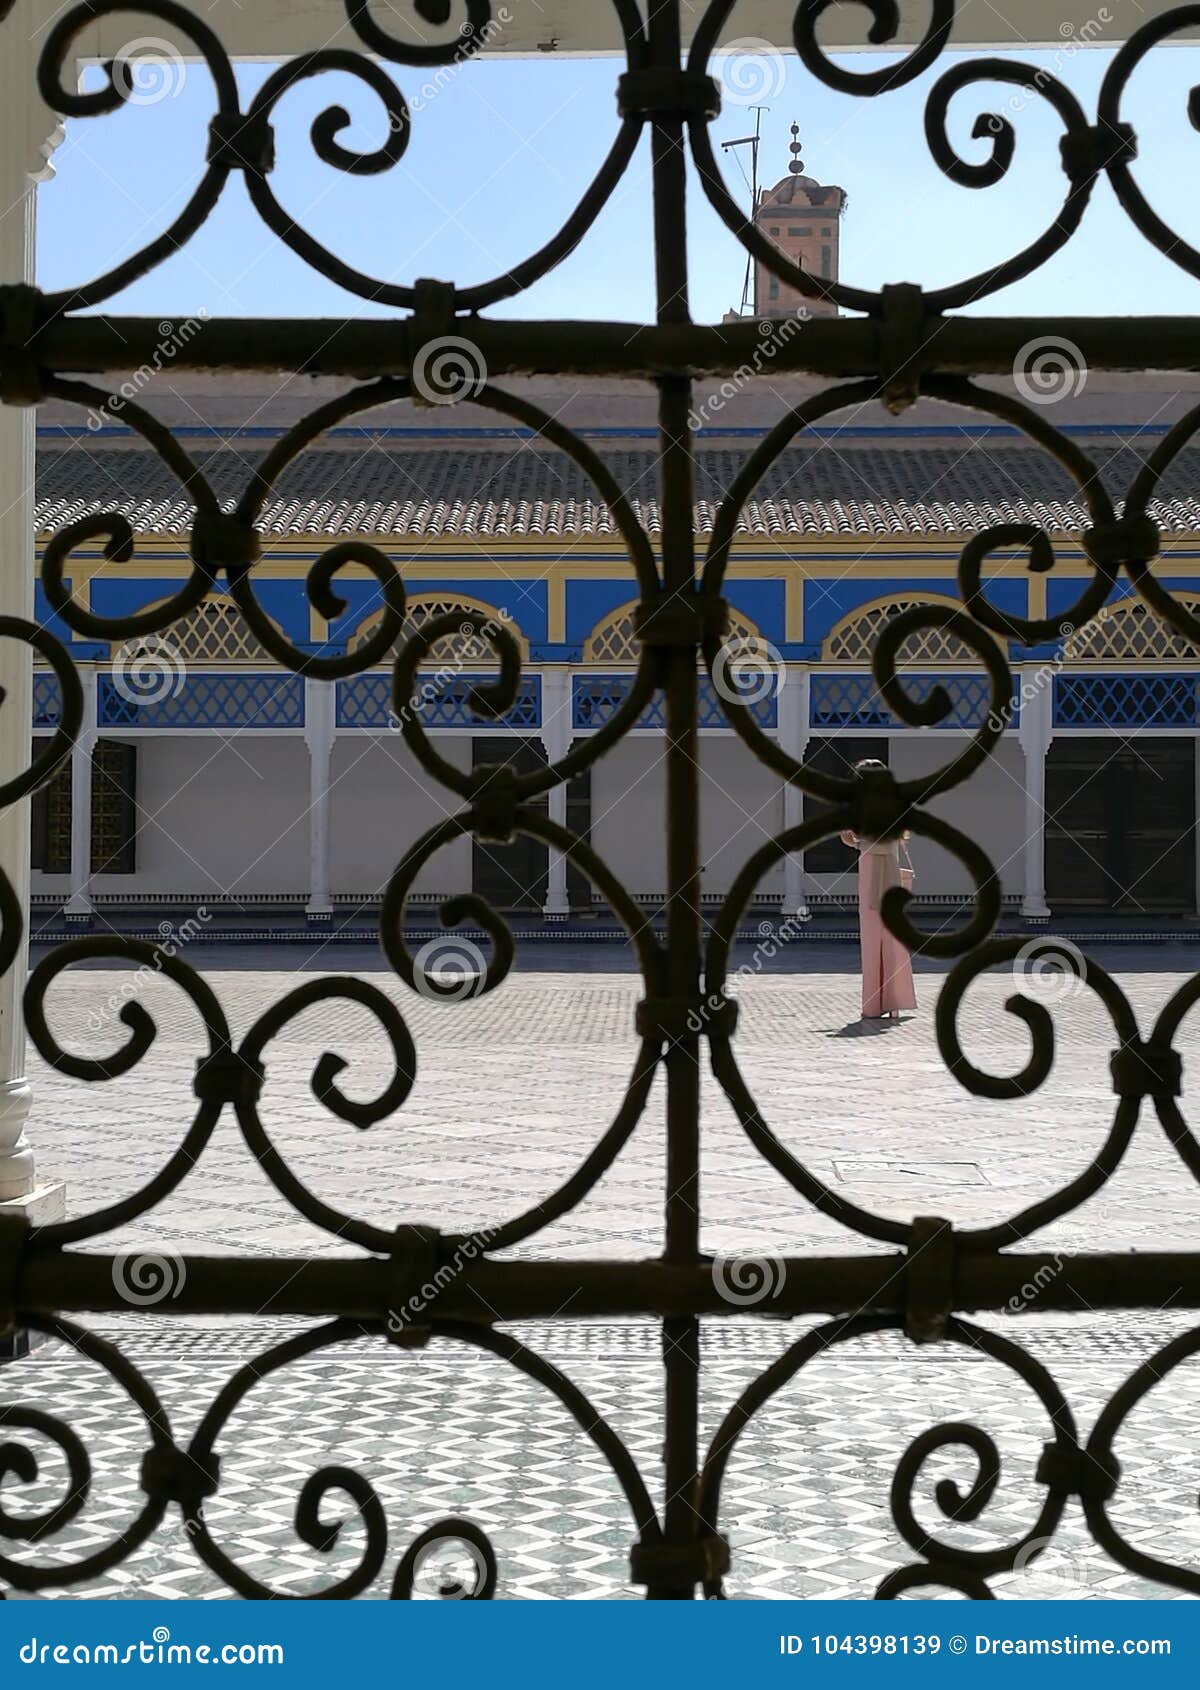 sublime courtyard at bahia palace, marakech